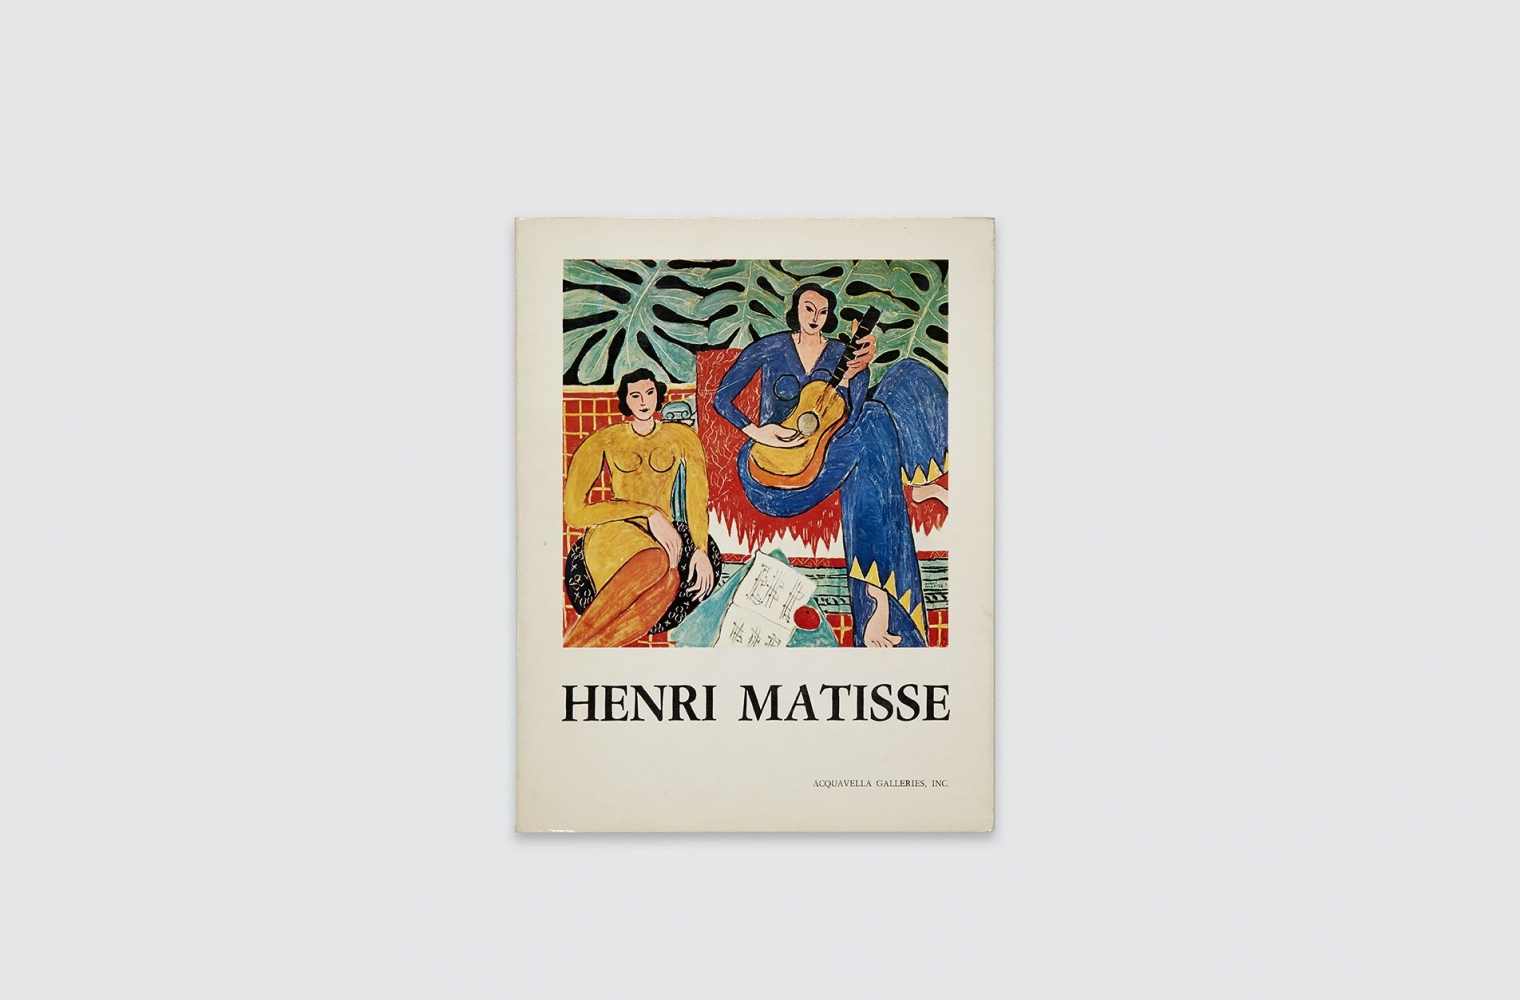 Catalogue for Henri Matisse exhibition, 1973.